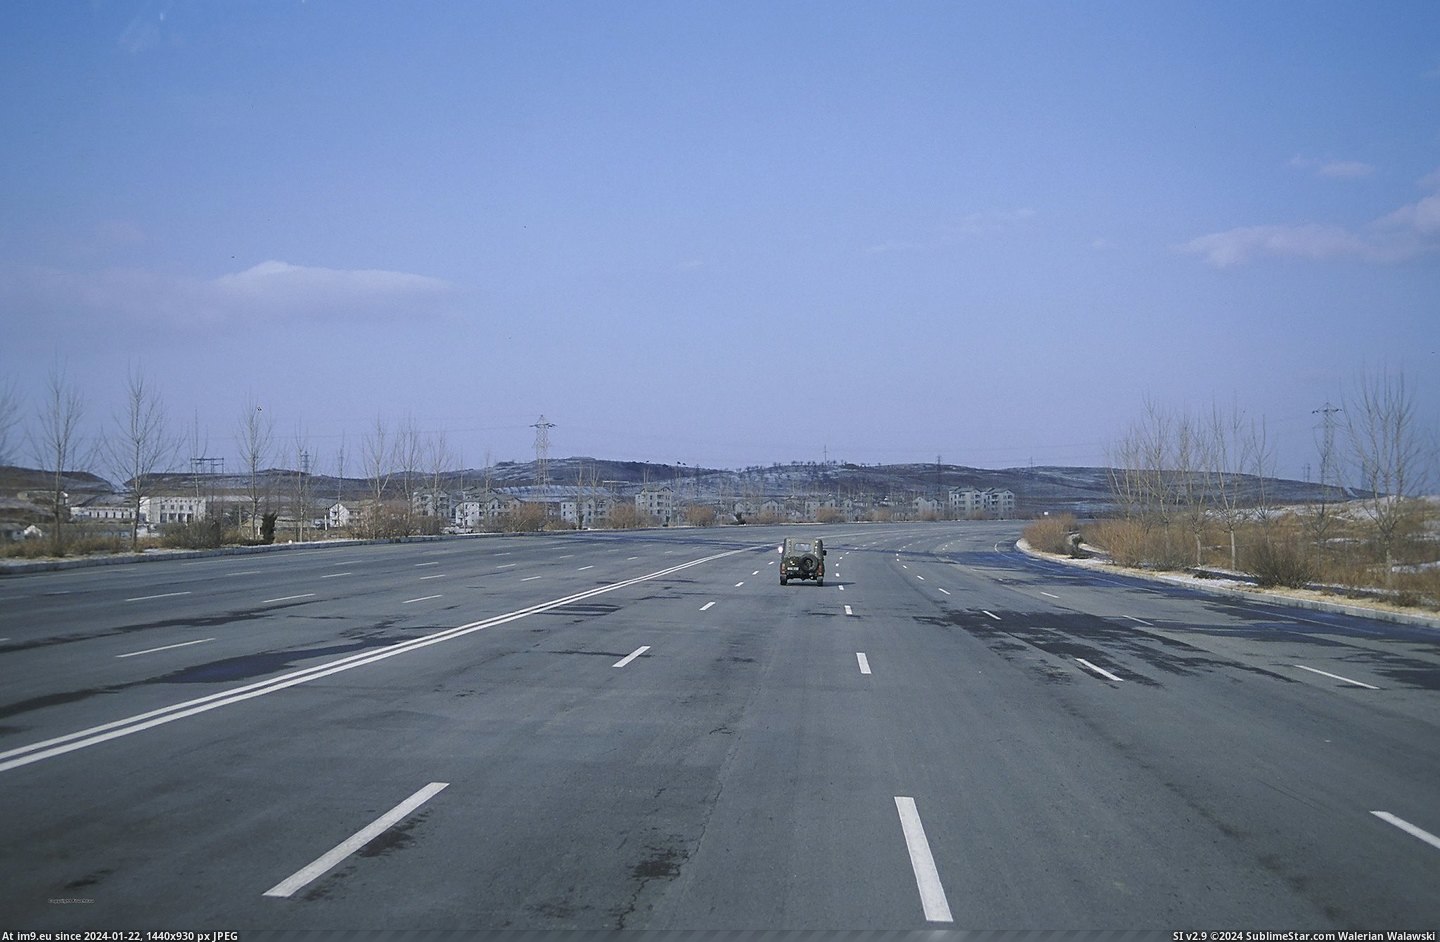 #North #Empty #Highways #Korea [Pics] The empty highways of North Korea. Pic. (Obraz z album My r/PICS favs))